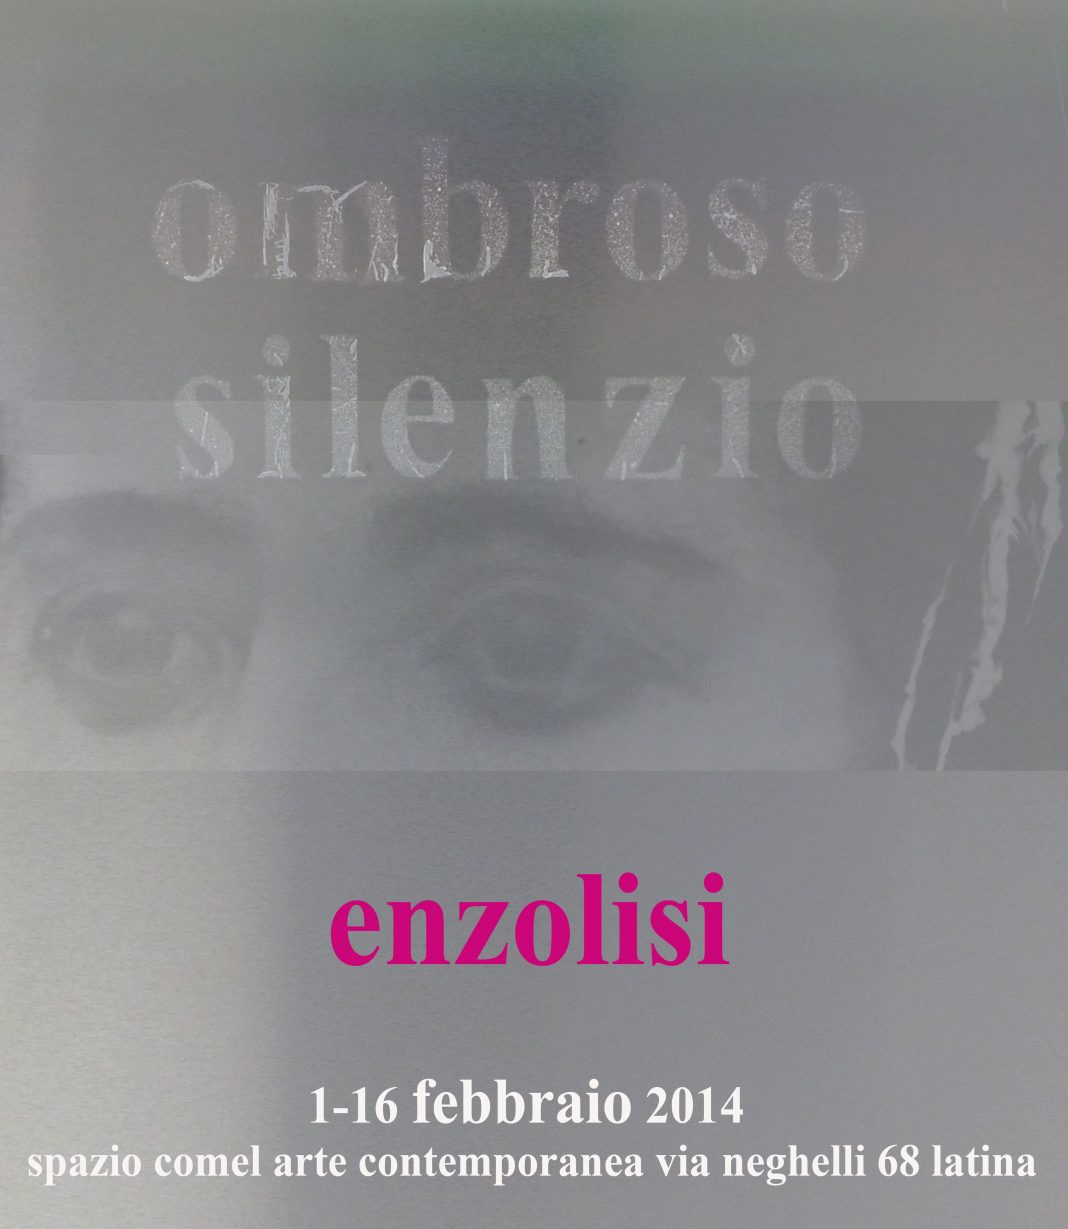 Enzo Lisi – Ombroso silenziohttps://www.exibart.com/repository/media/eventi/2014/01/enzo-lisi-8211-ombroso-silenzio-1068x1229.jpg